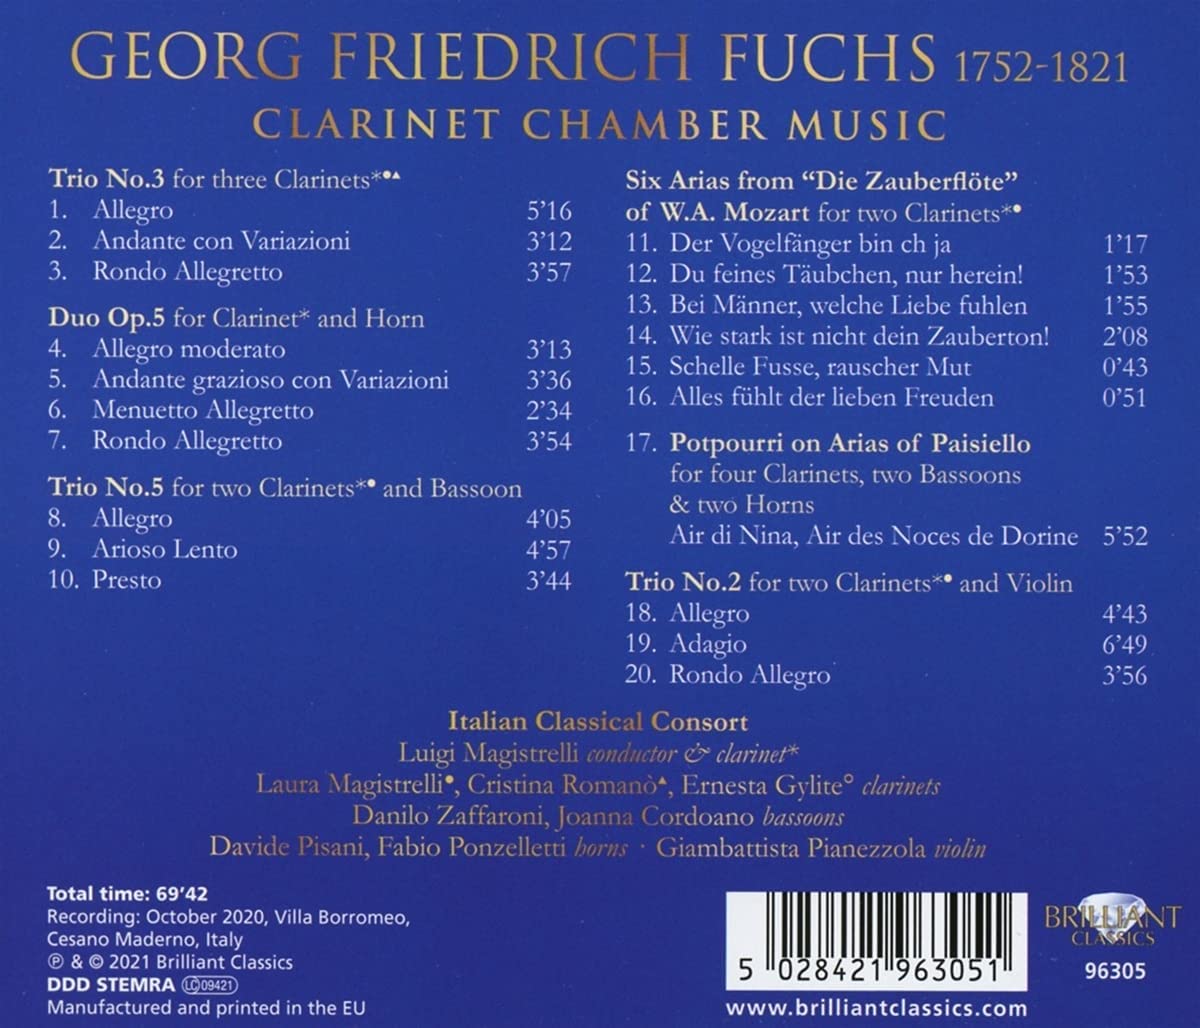 Italian Classical Consort 게오르그 프리드리히 푹스: 클라리넷 실내악 작품 (Georg Friedrich Fuchs: Clarinet Chamber Music) 